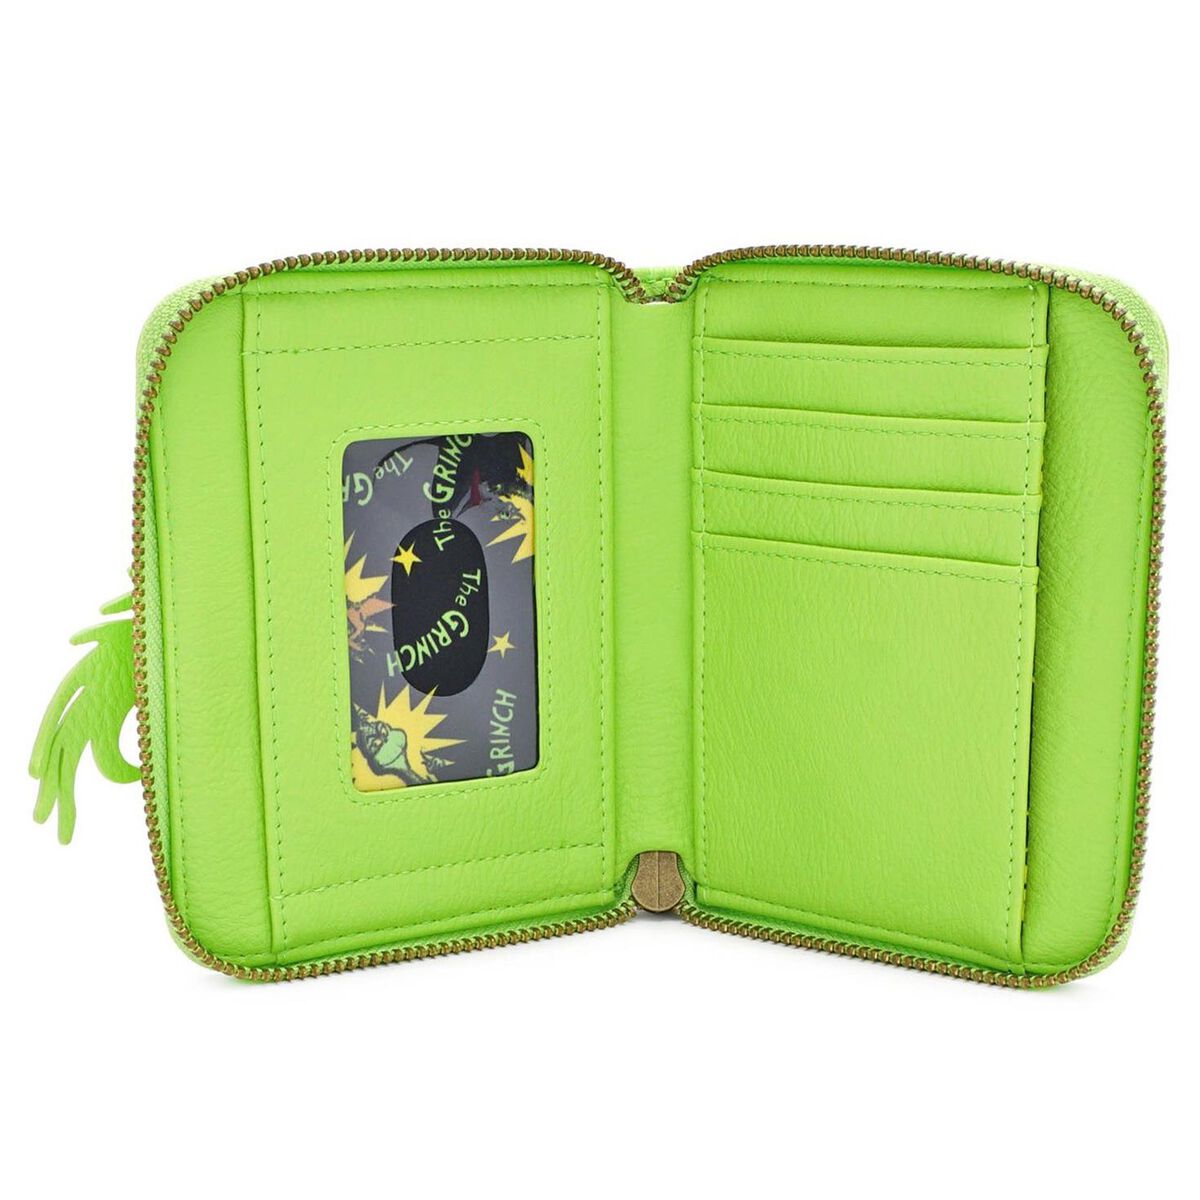 Loungefly Grinch Leather Wallet - Handbags & Purses - Hallmark